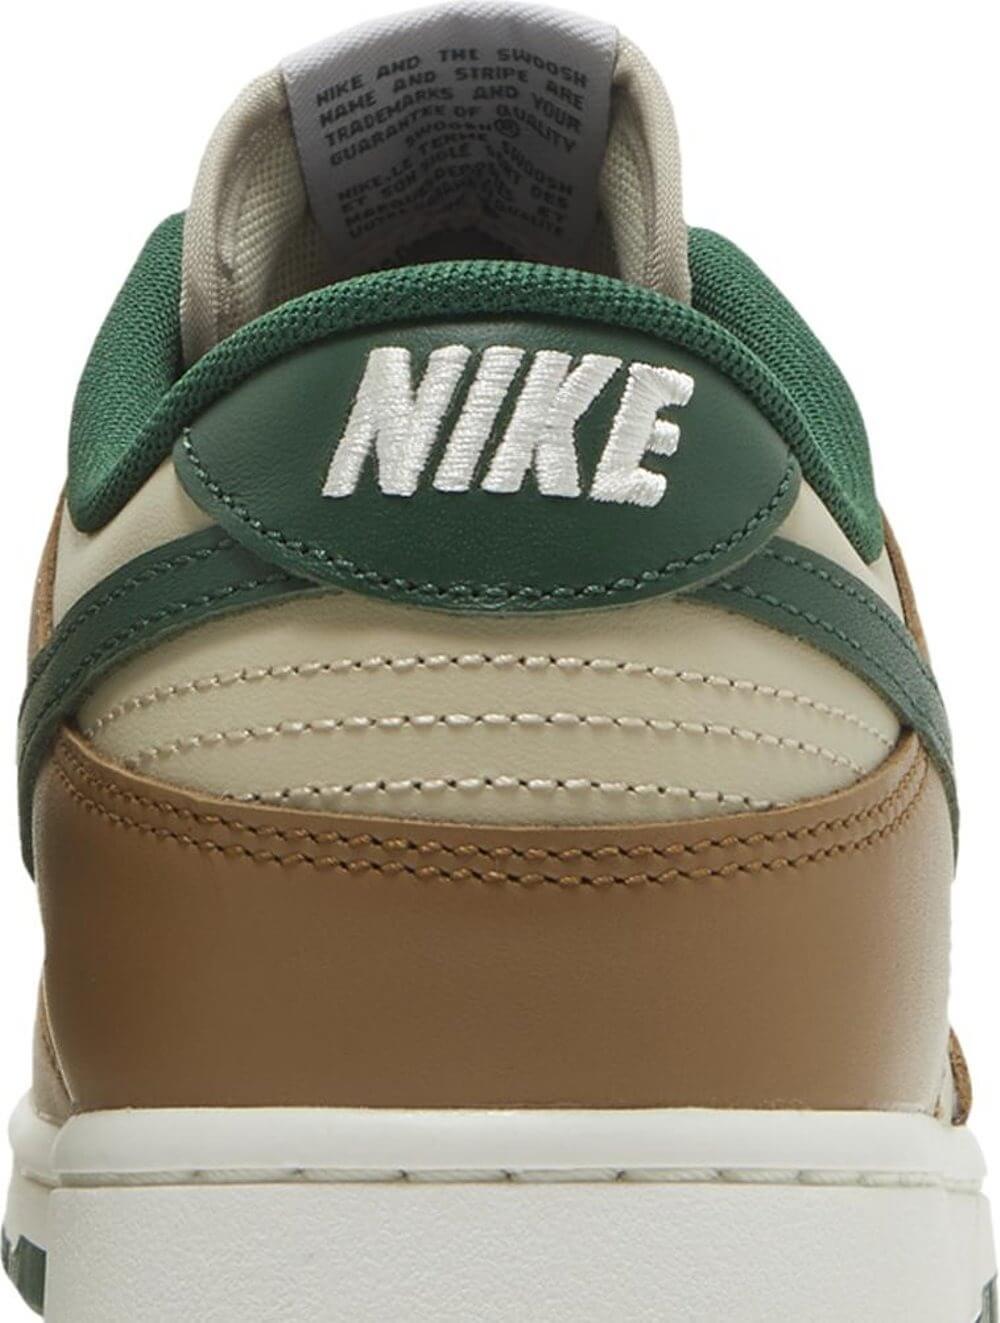 Dunk Low ‘Rattan Canyon Green’ - Nike - FB7160 231